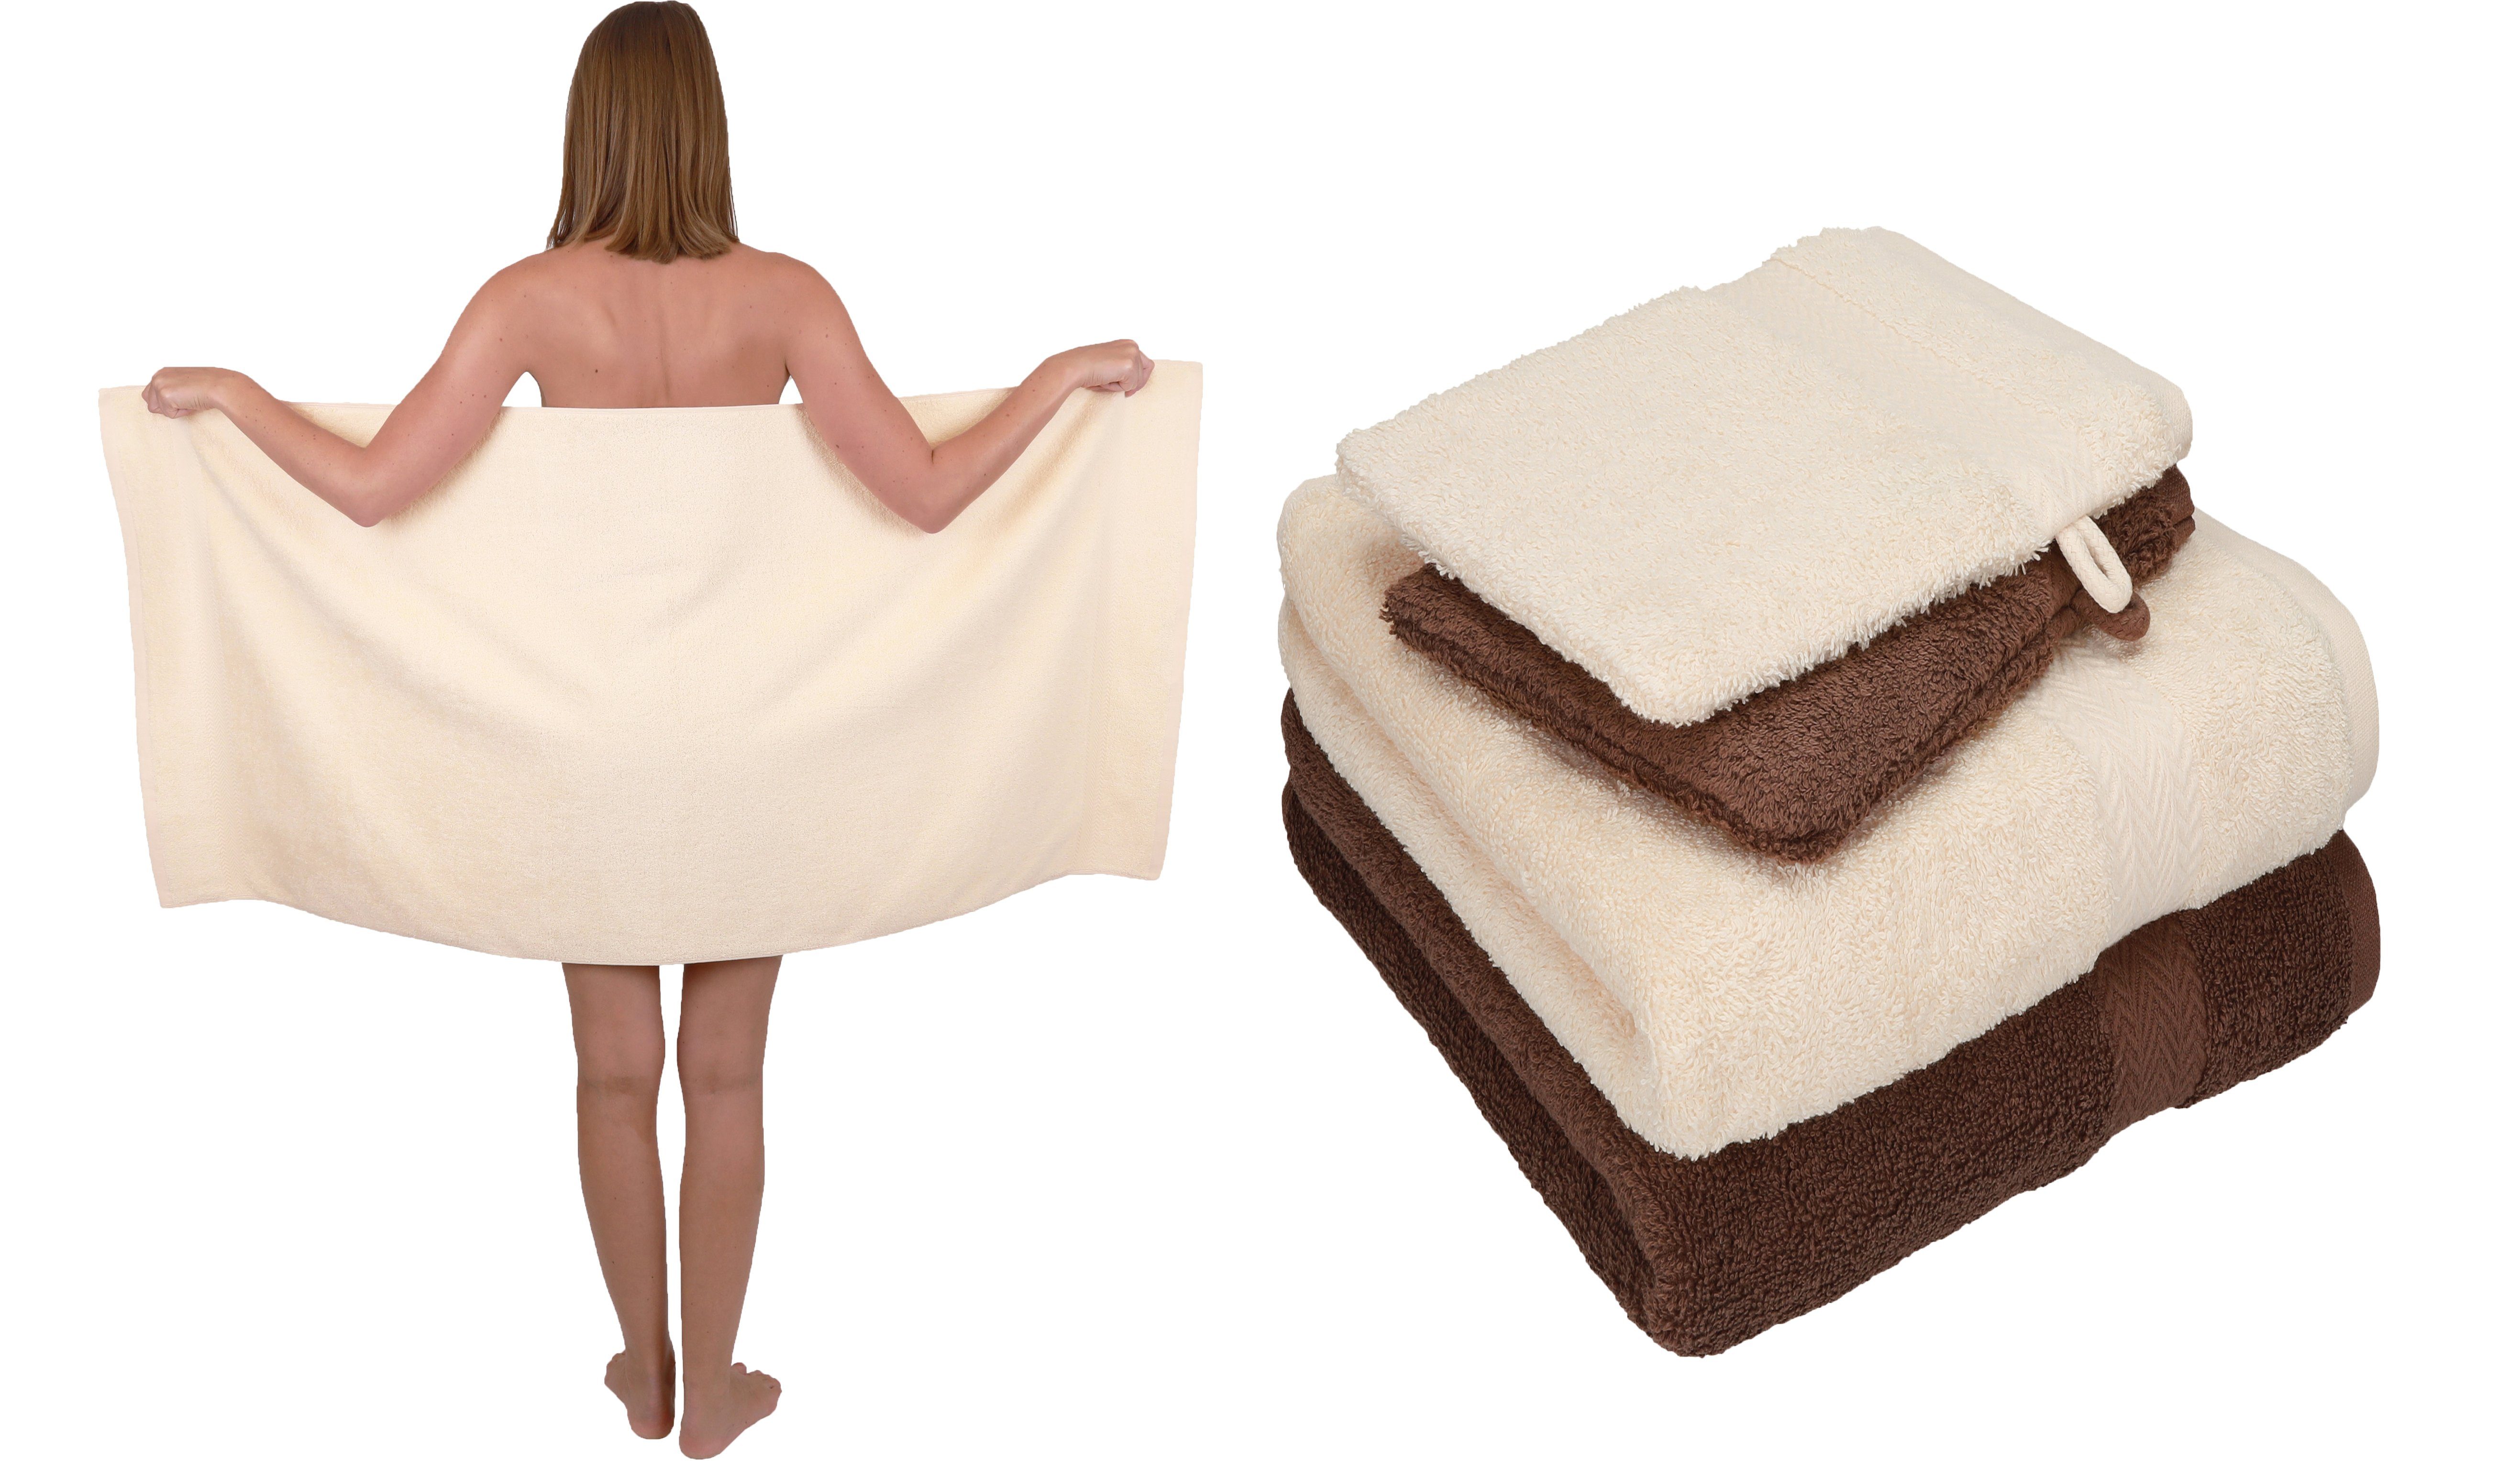 Betz Handtuch Set 5 TLG. Handtuch Set Single Pack 100% Baumwolle 1 Duschtuch 2 Handtücher 2 Waschhandschuhe, 100% Baumwolle beige-nuss